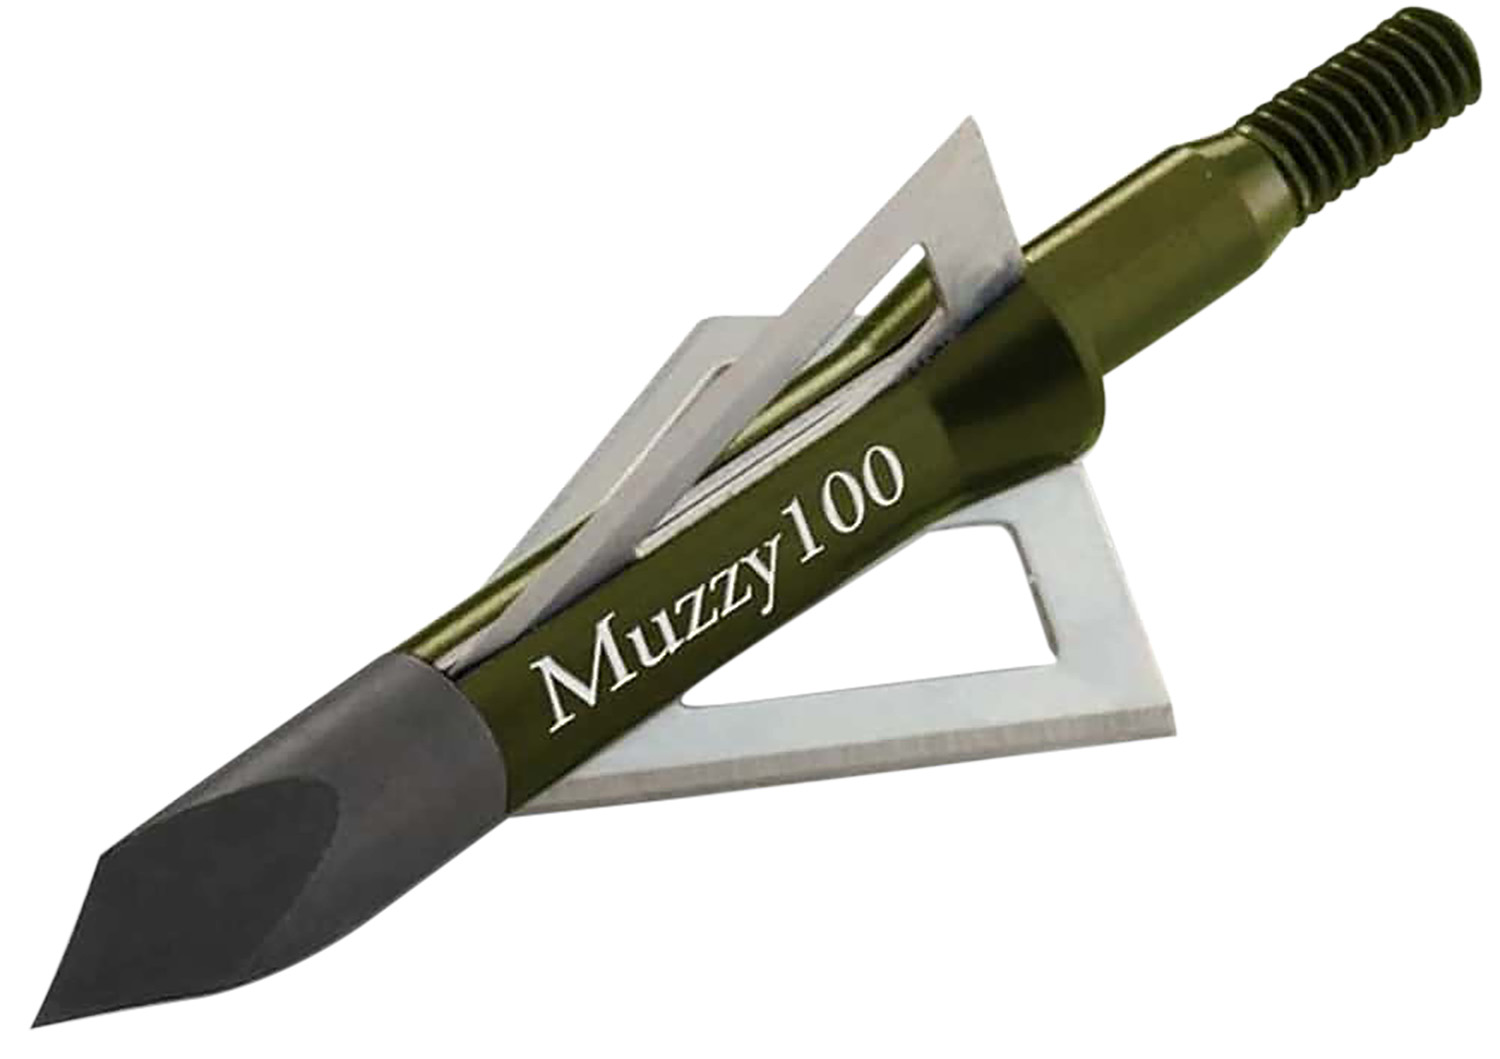 Muzzy 225 3- Blade Broadhead Trocar Tip Anodized Aluminum Ferrule Blades 100 Gr/6 Per Pack